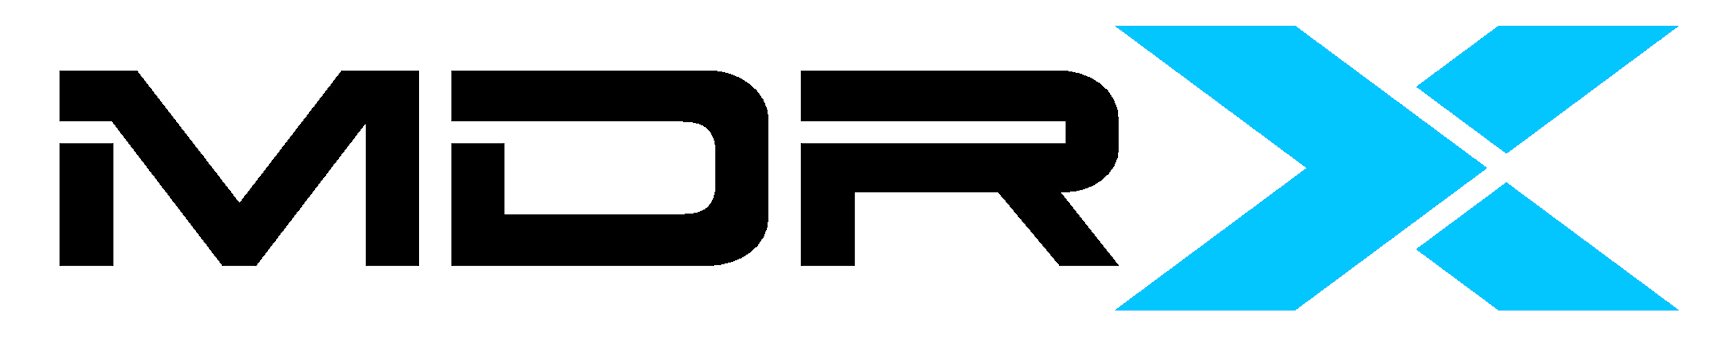 Trademark Logo MDRX